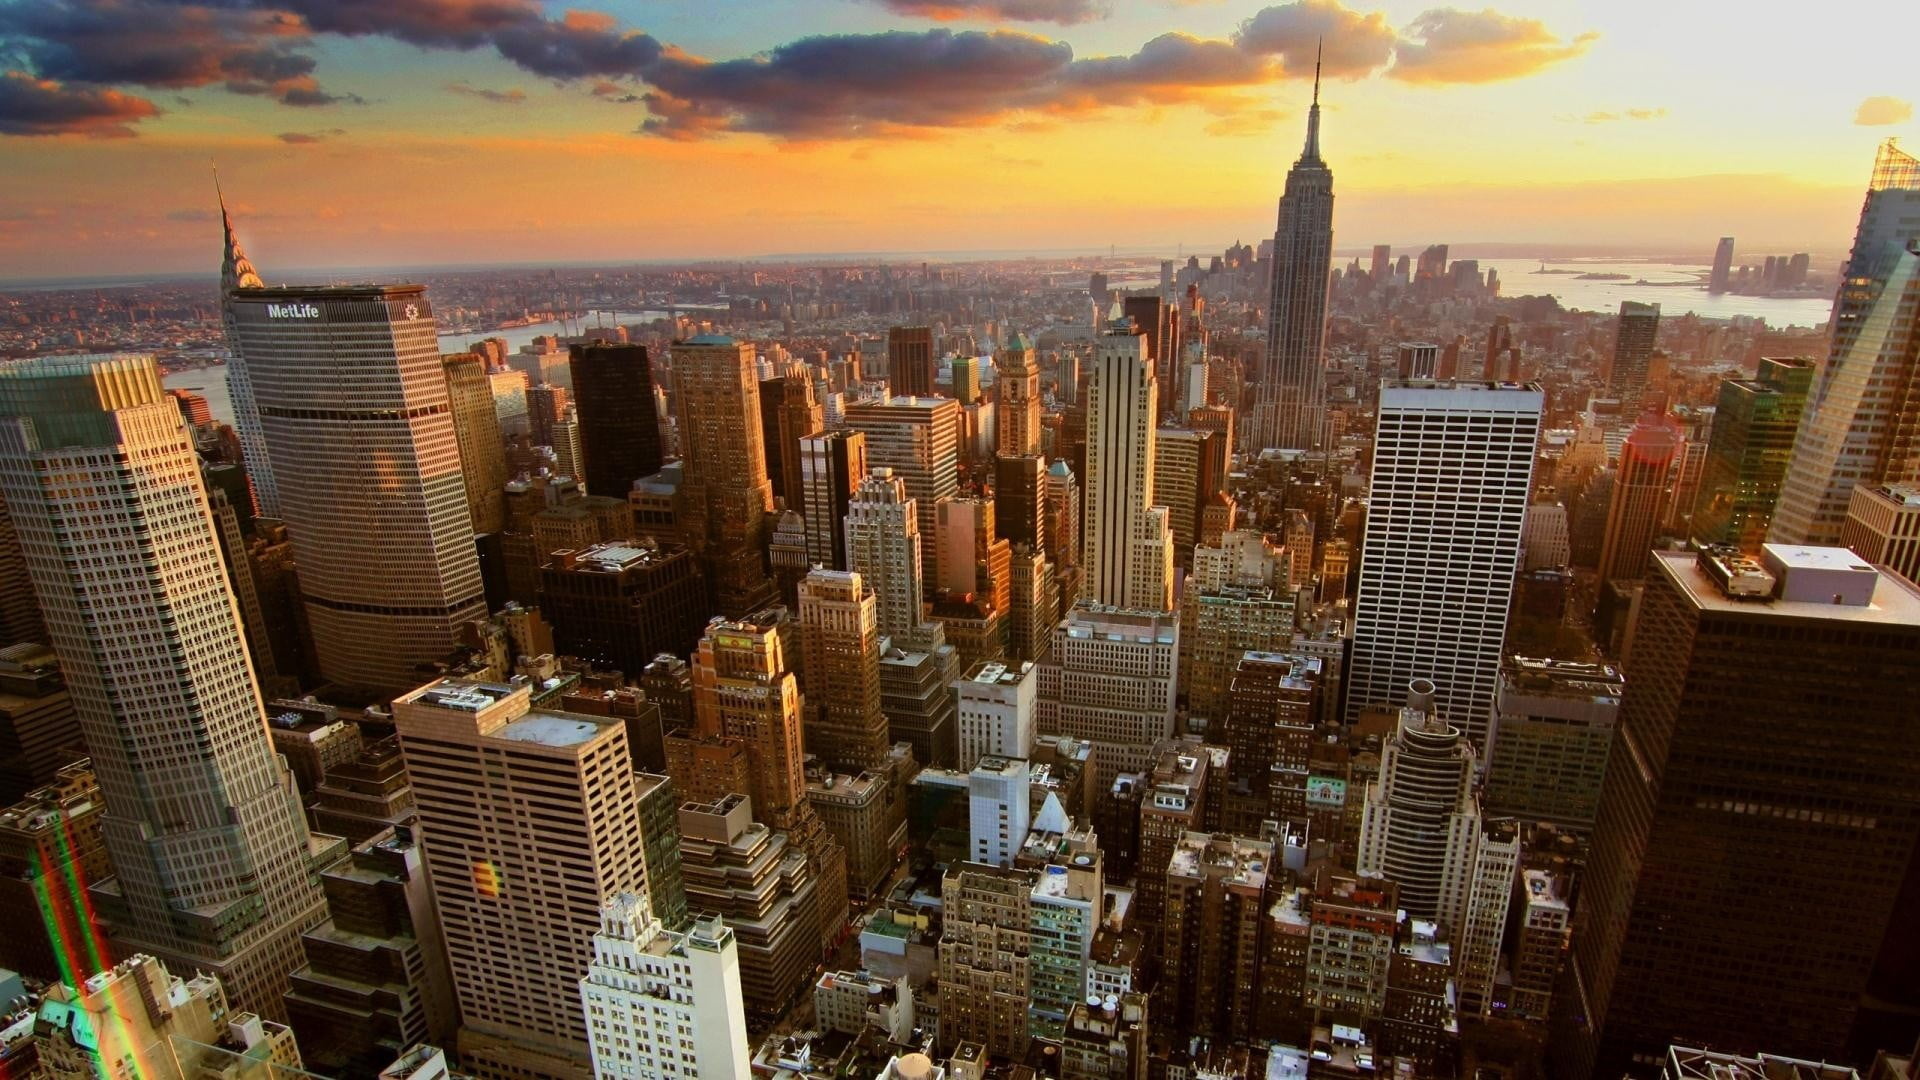 Cityscape: Empire State Building, Skyscrapers in Manhattan, Big Apple, New York City. 1920x1080 Full HD Wallpaper.